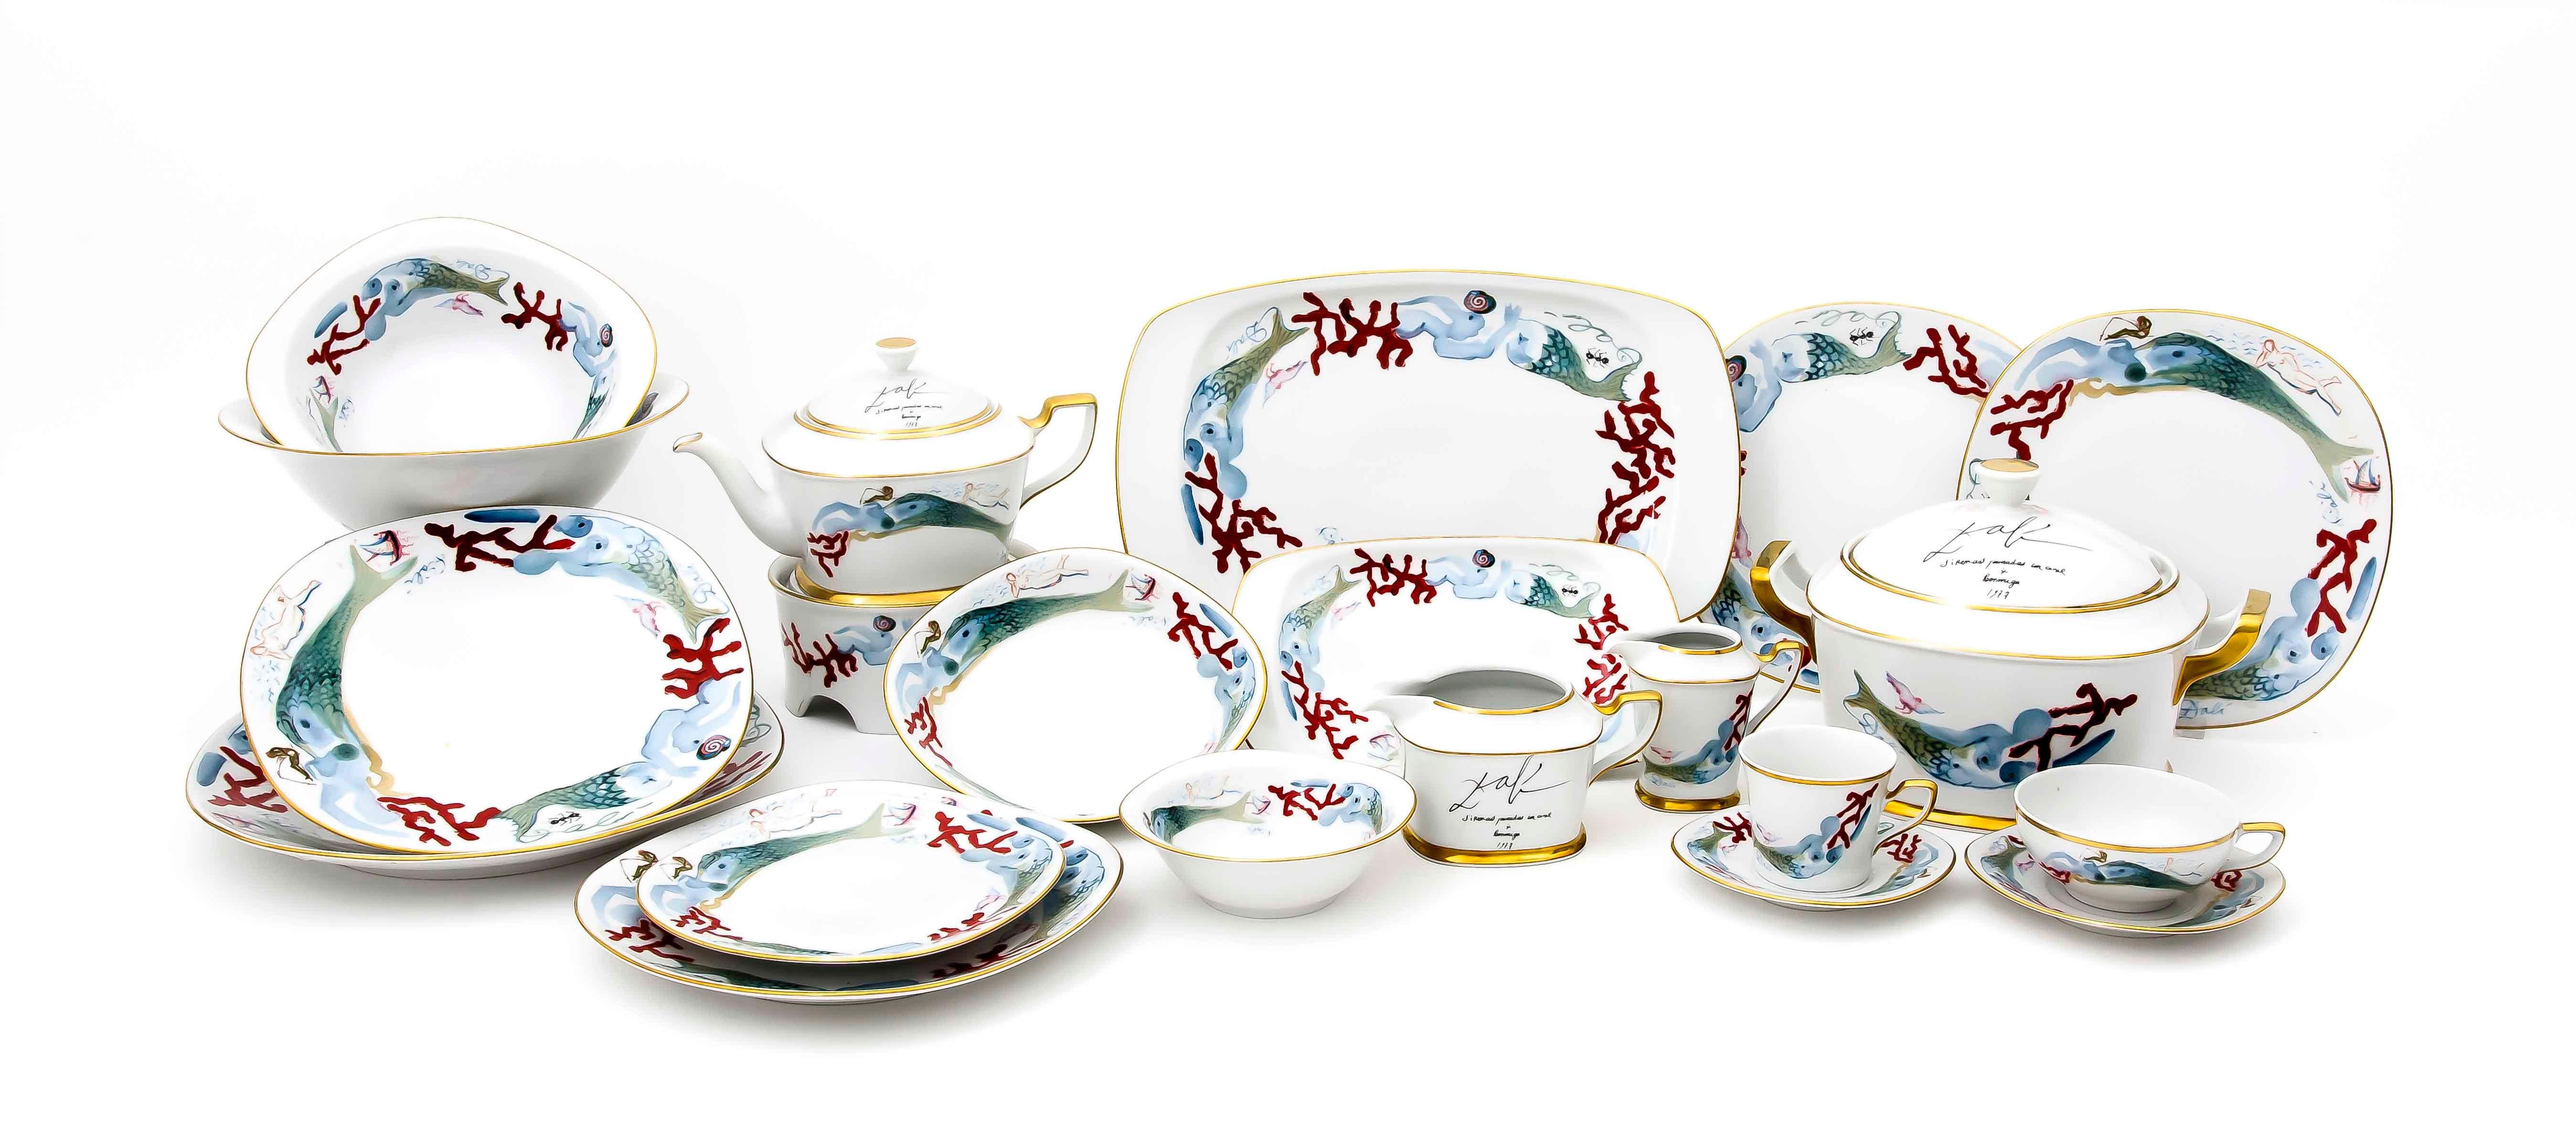 German Salvador Dali Service Porcelain 113 Pieces 1977 Limited Edition N°577/1000 For Sale